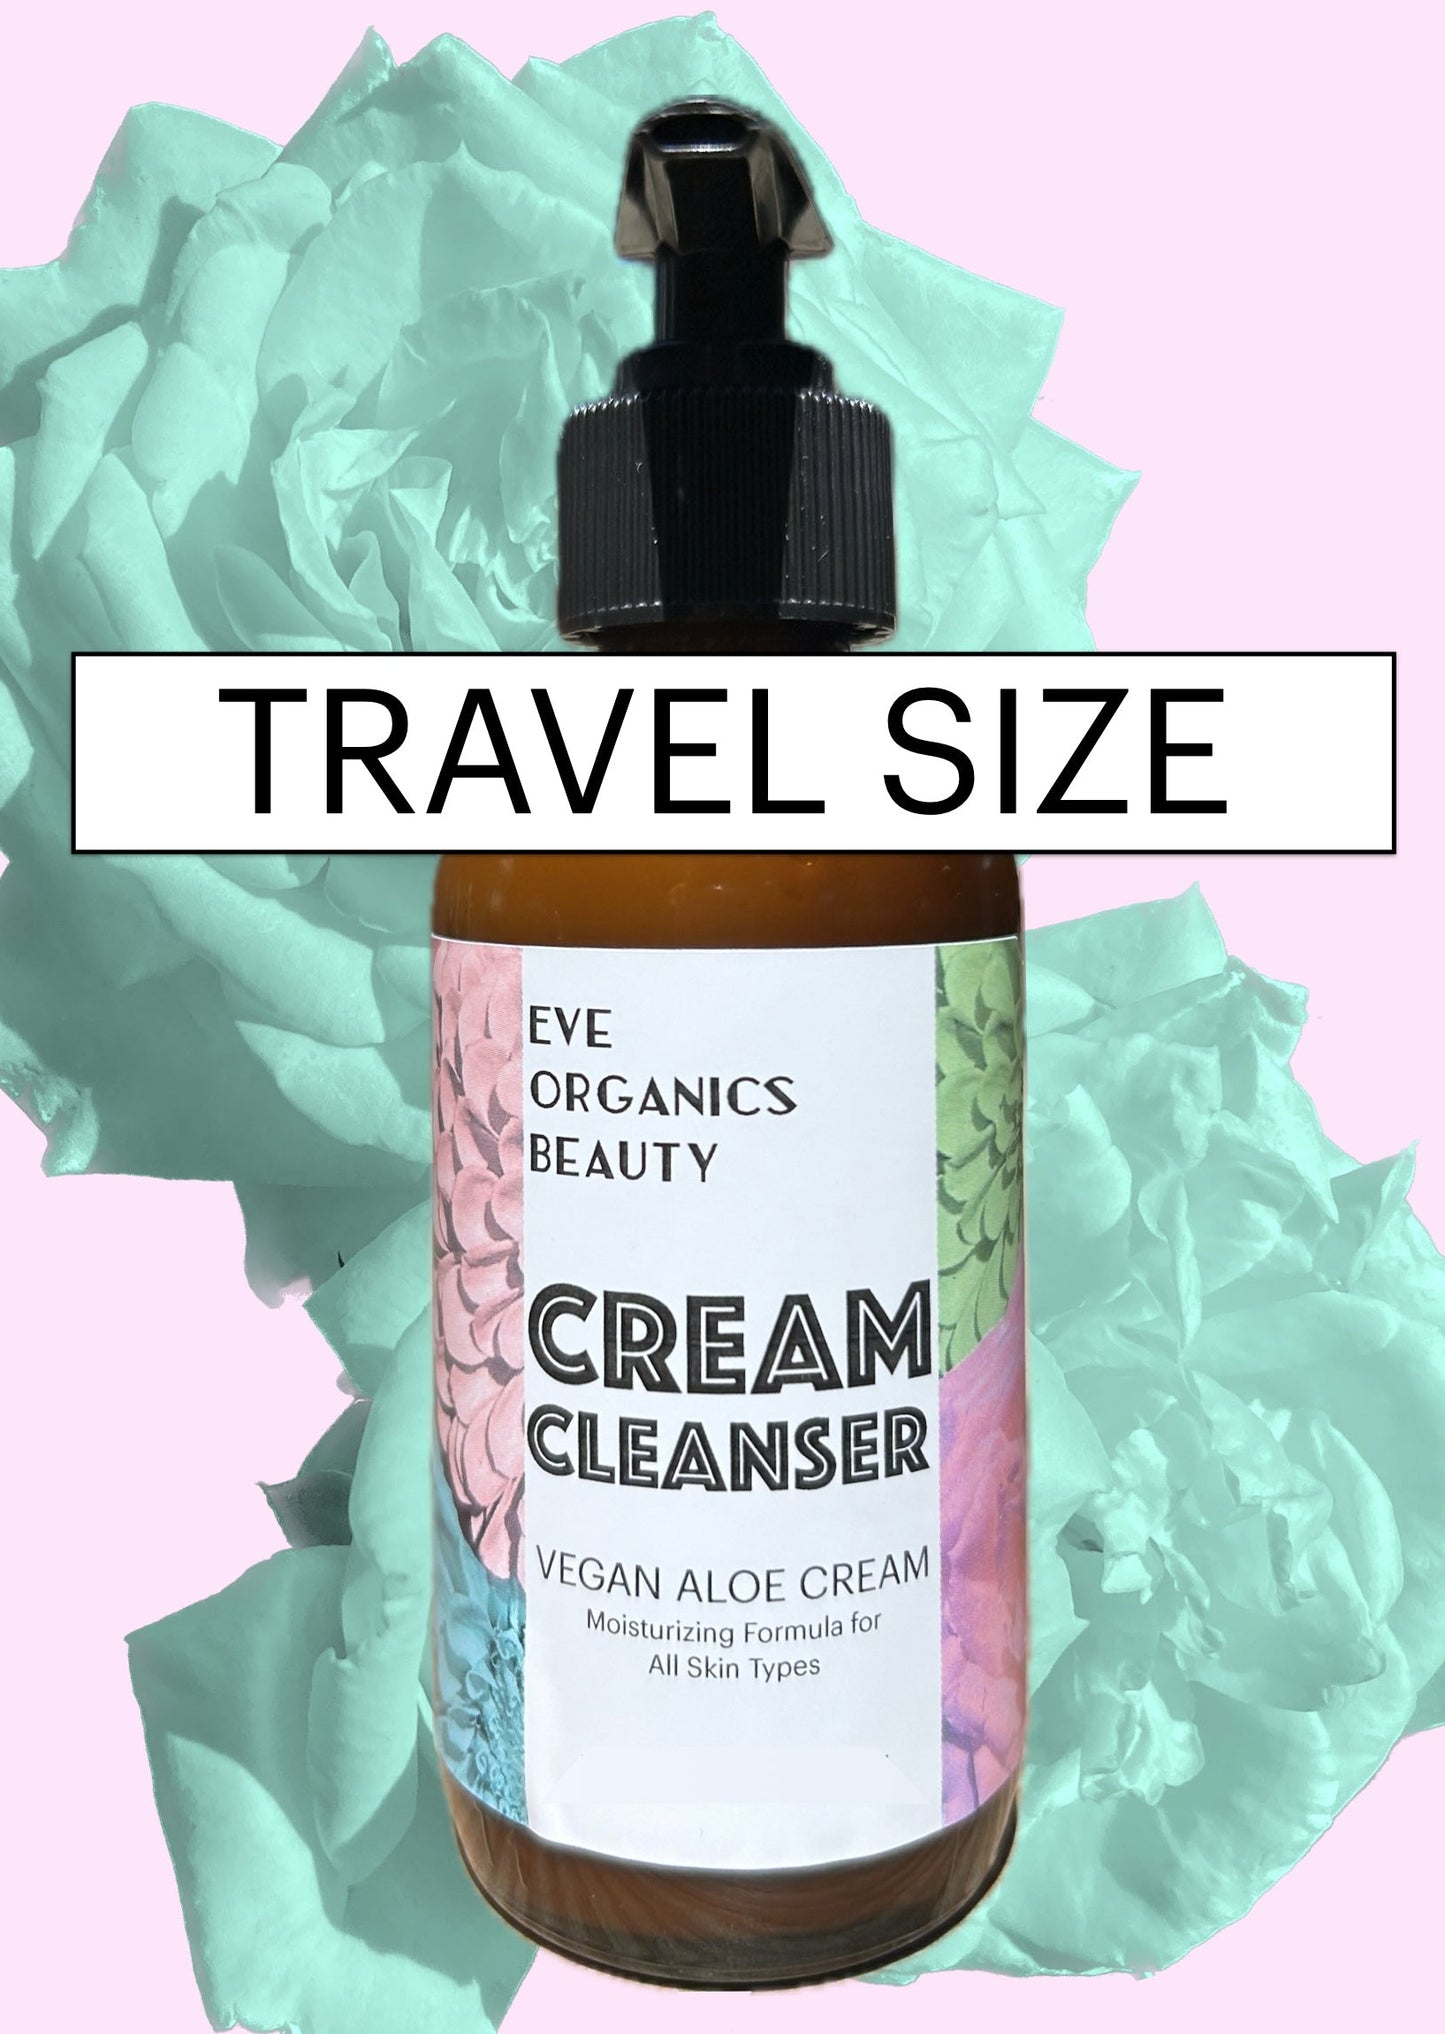 CREAM CLEANSER - Eve Organics Beauty